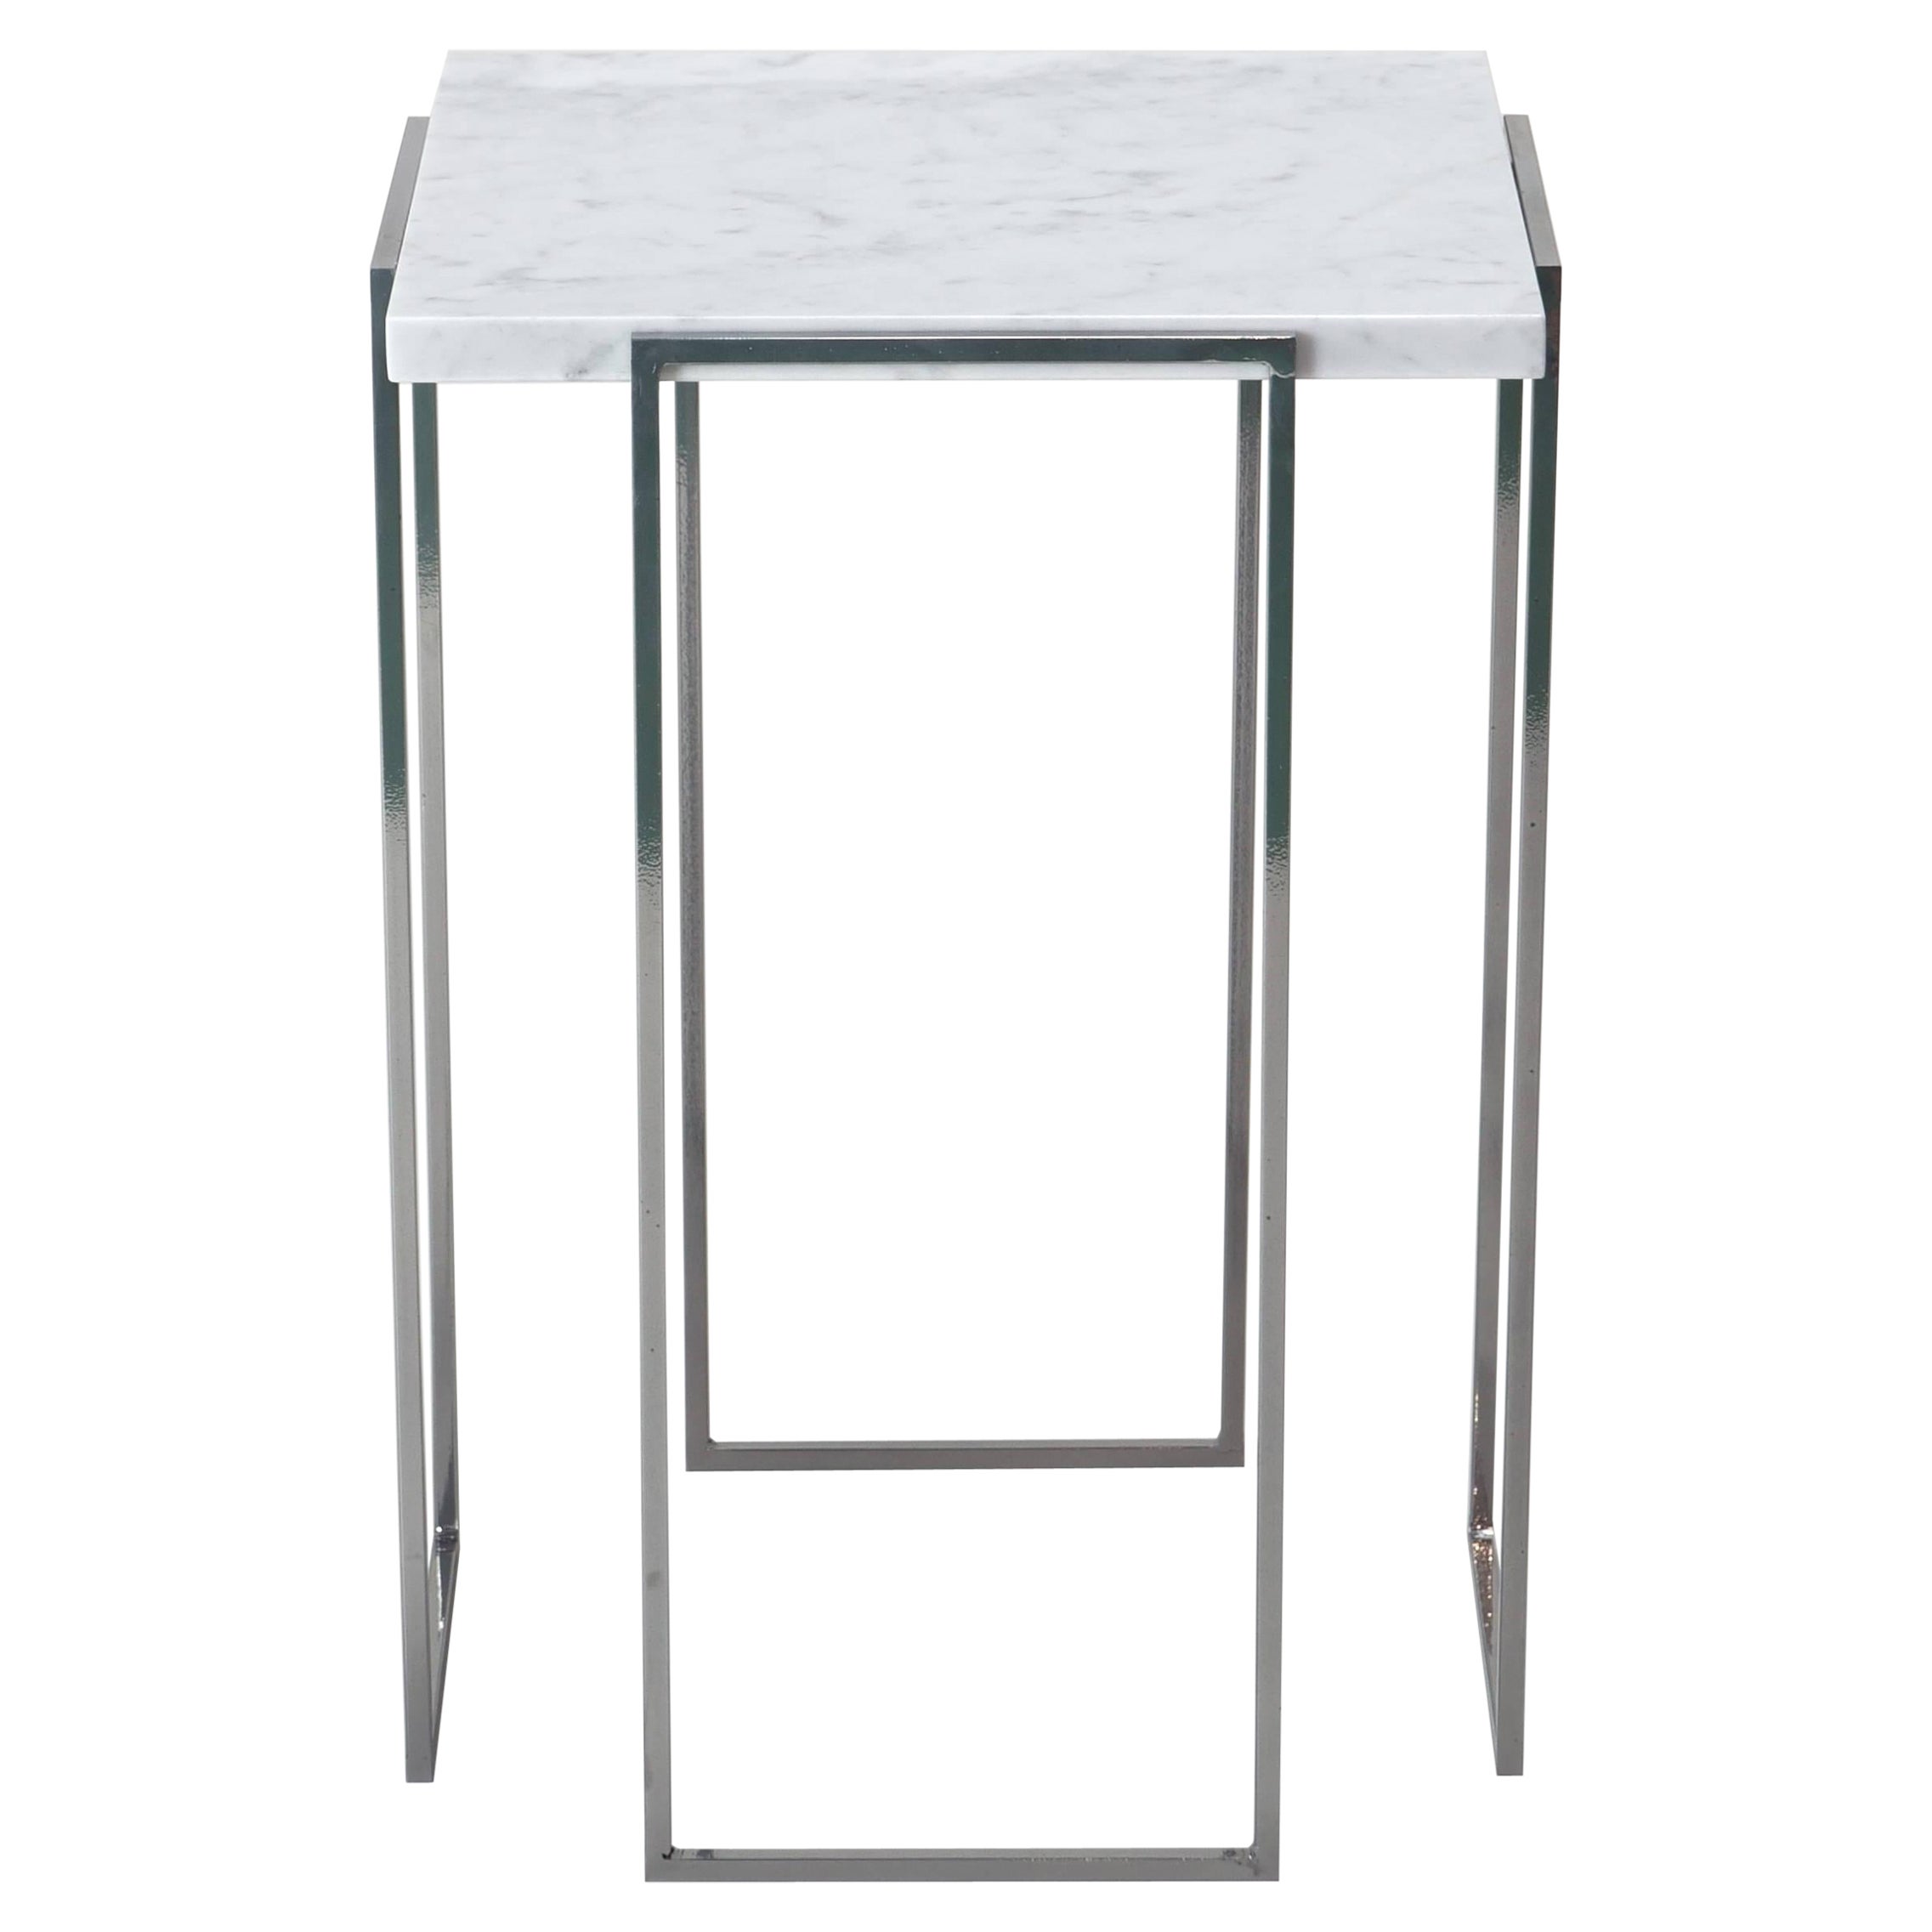 Kaus Cromo, Carrara Marble Side Table By DFdesignlab Handmade in Italy